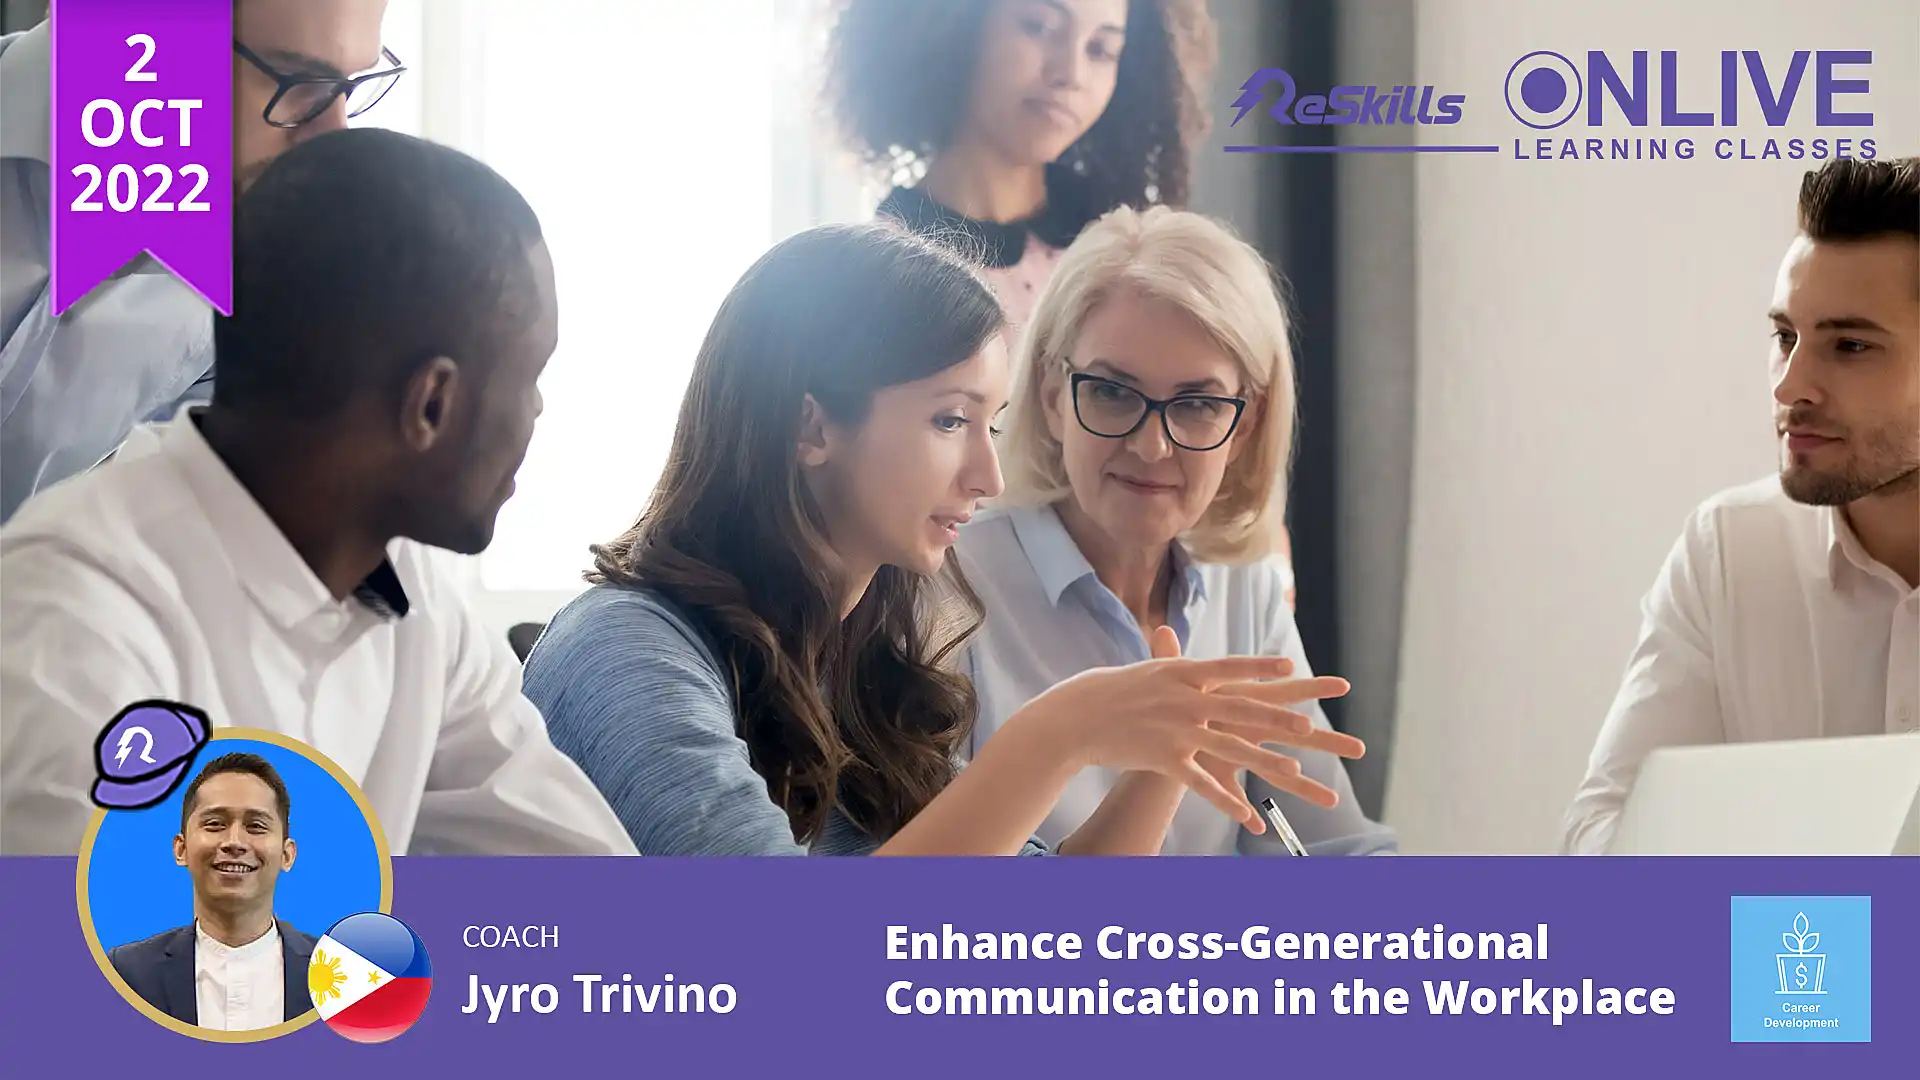 Enhance Cross-Generational Communication in the Workplace - ReSkills